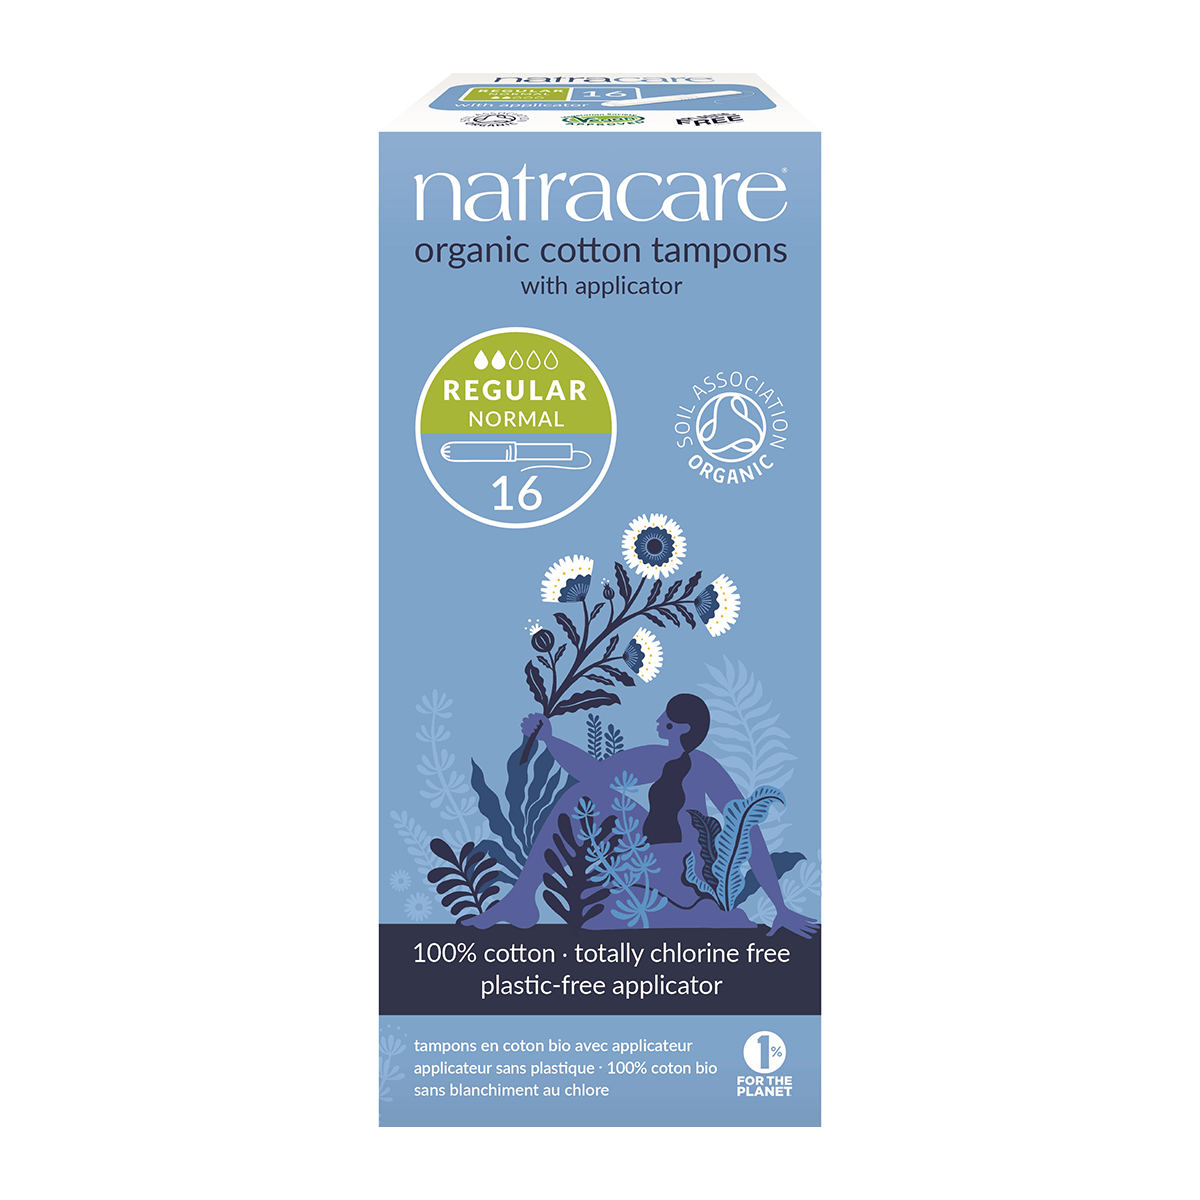 NatraCare Organic Cotton Tampons Regular With Applicator 16 Tampons Feminine Sanitary Supplies at Village Vitamin Store